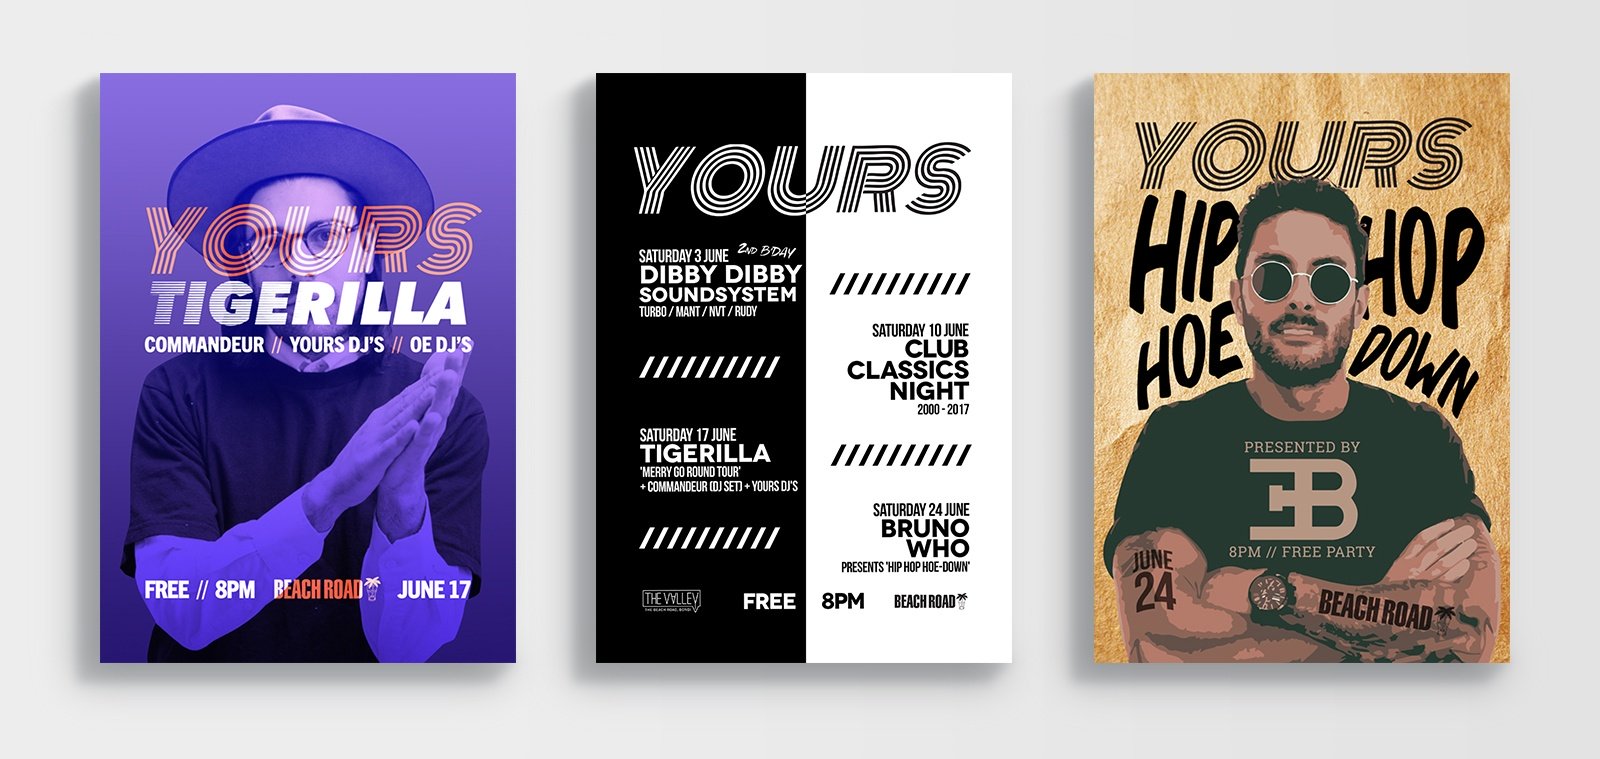 Event posters designed by Sydney Design Social